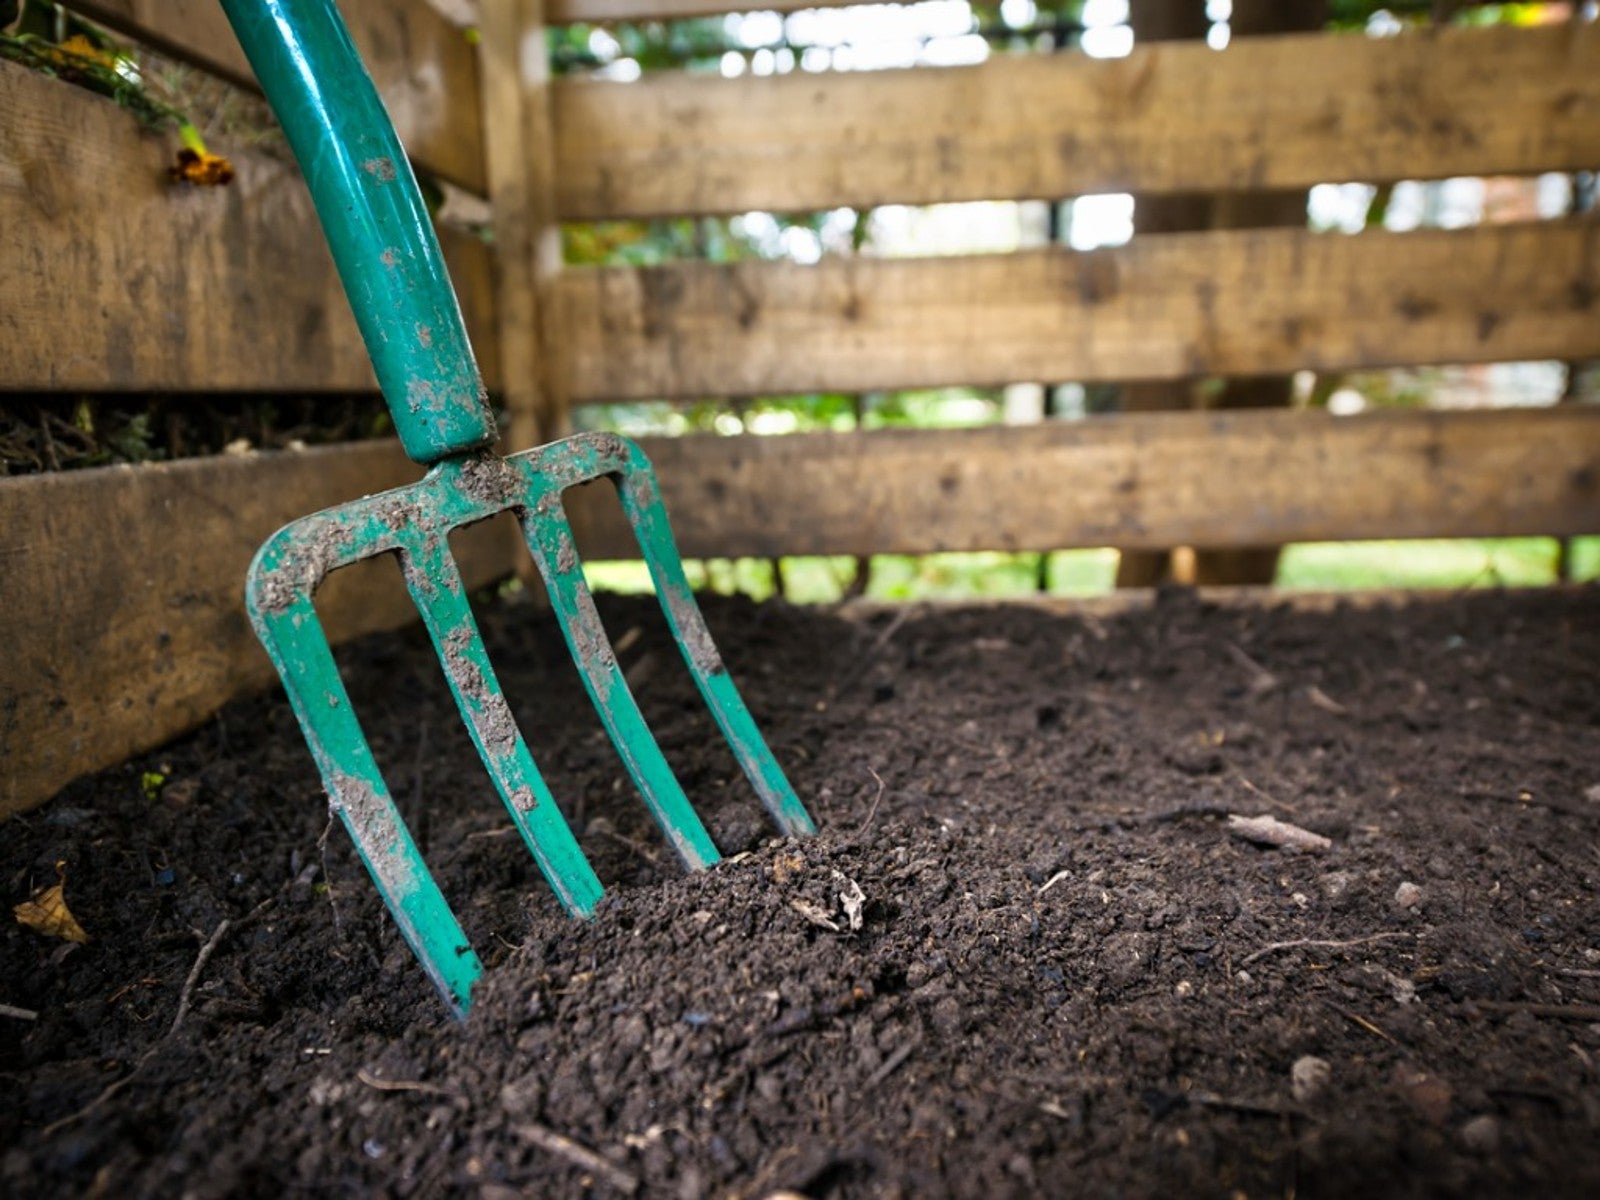 A teal pitchfork rests in a compost bin